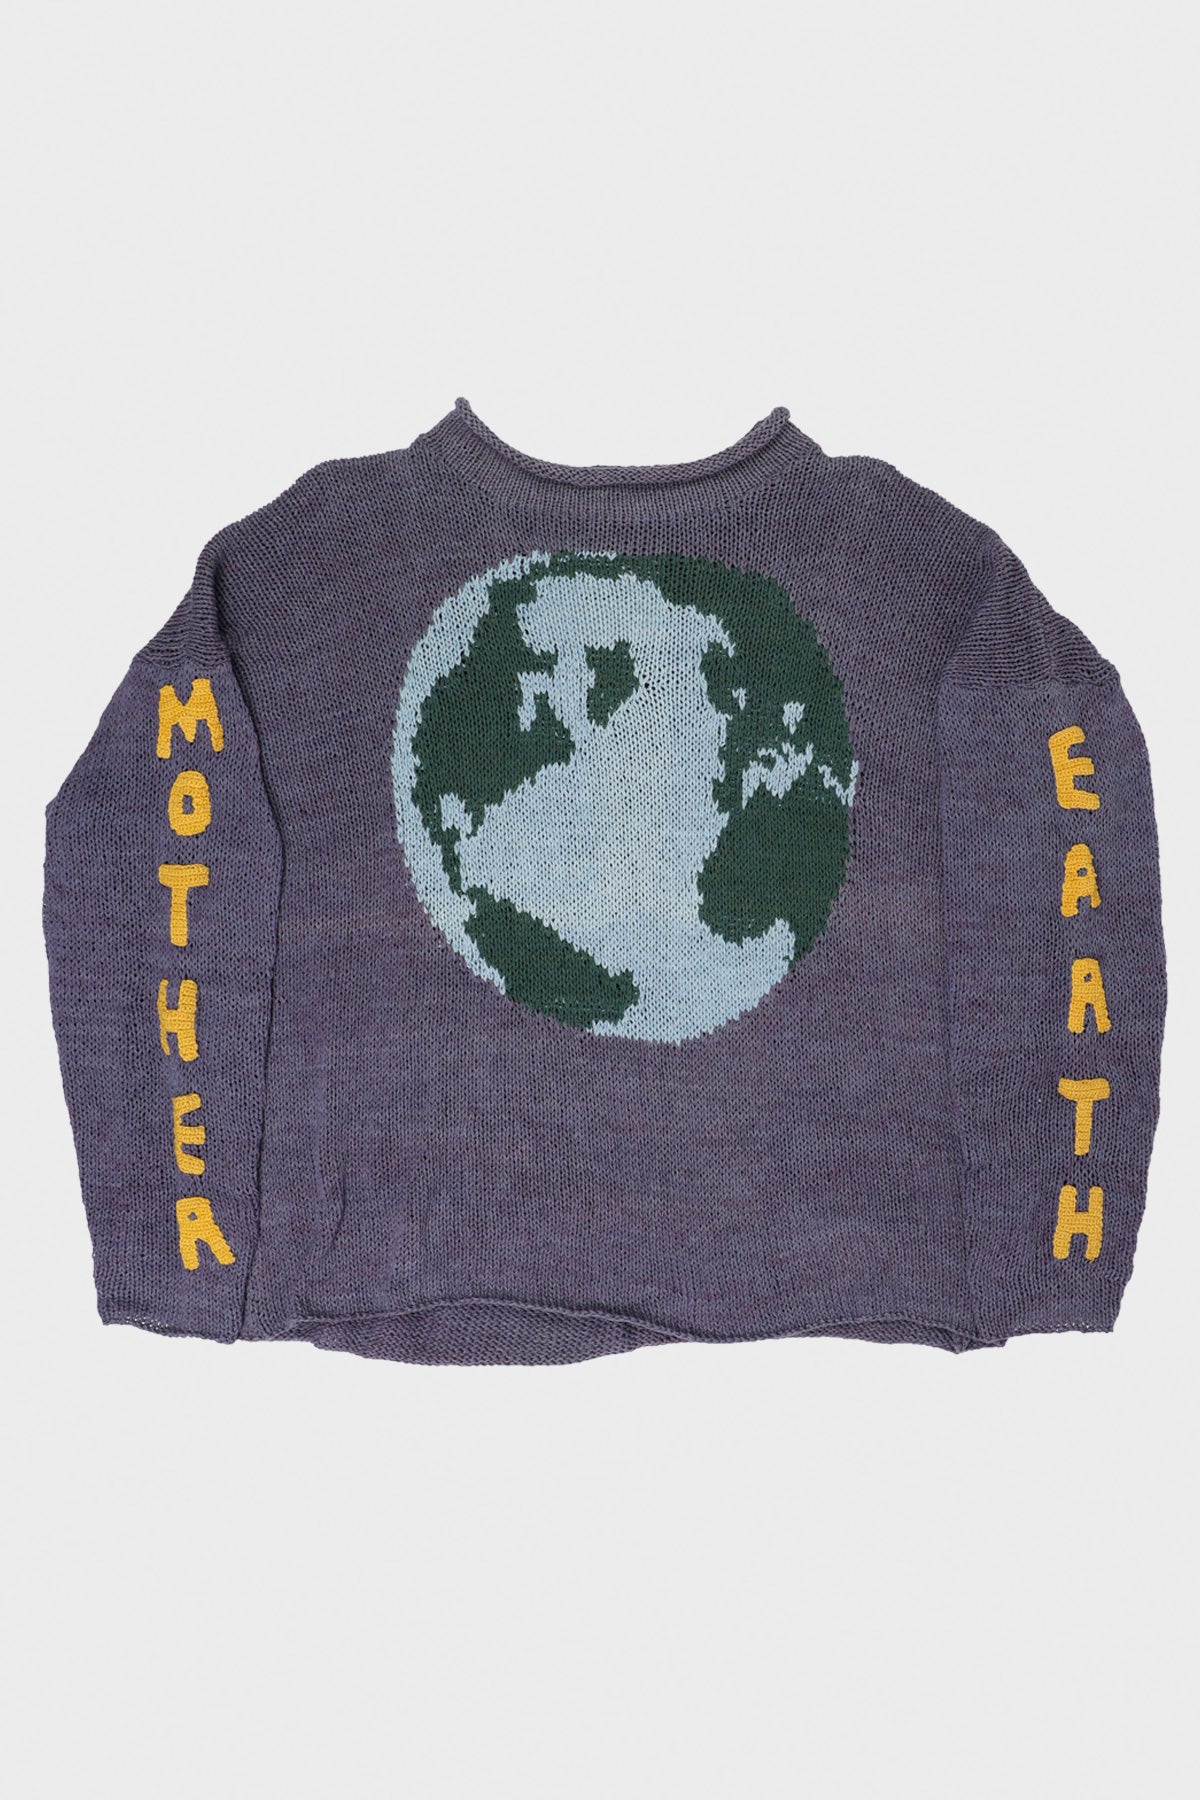 Twinsun Rollneck - Purple Mother Earth